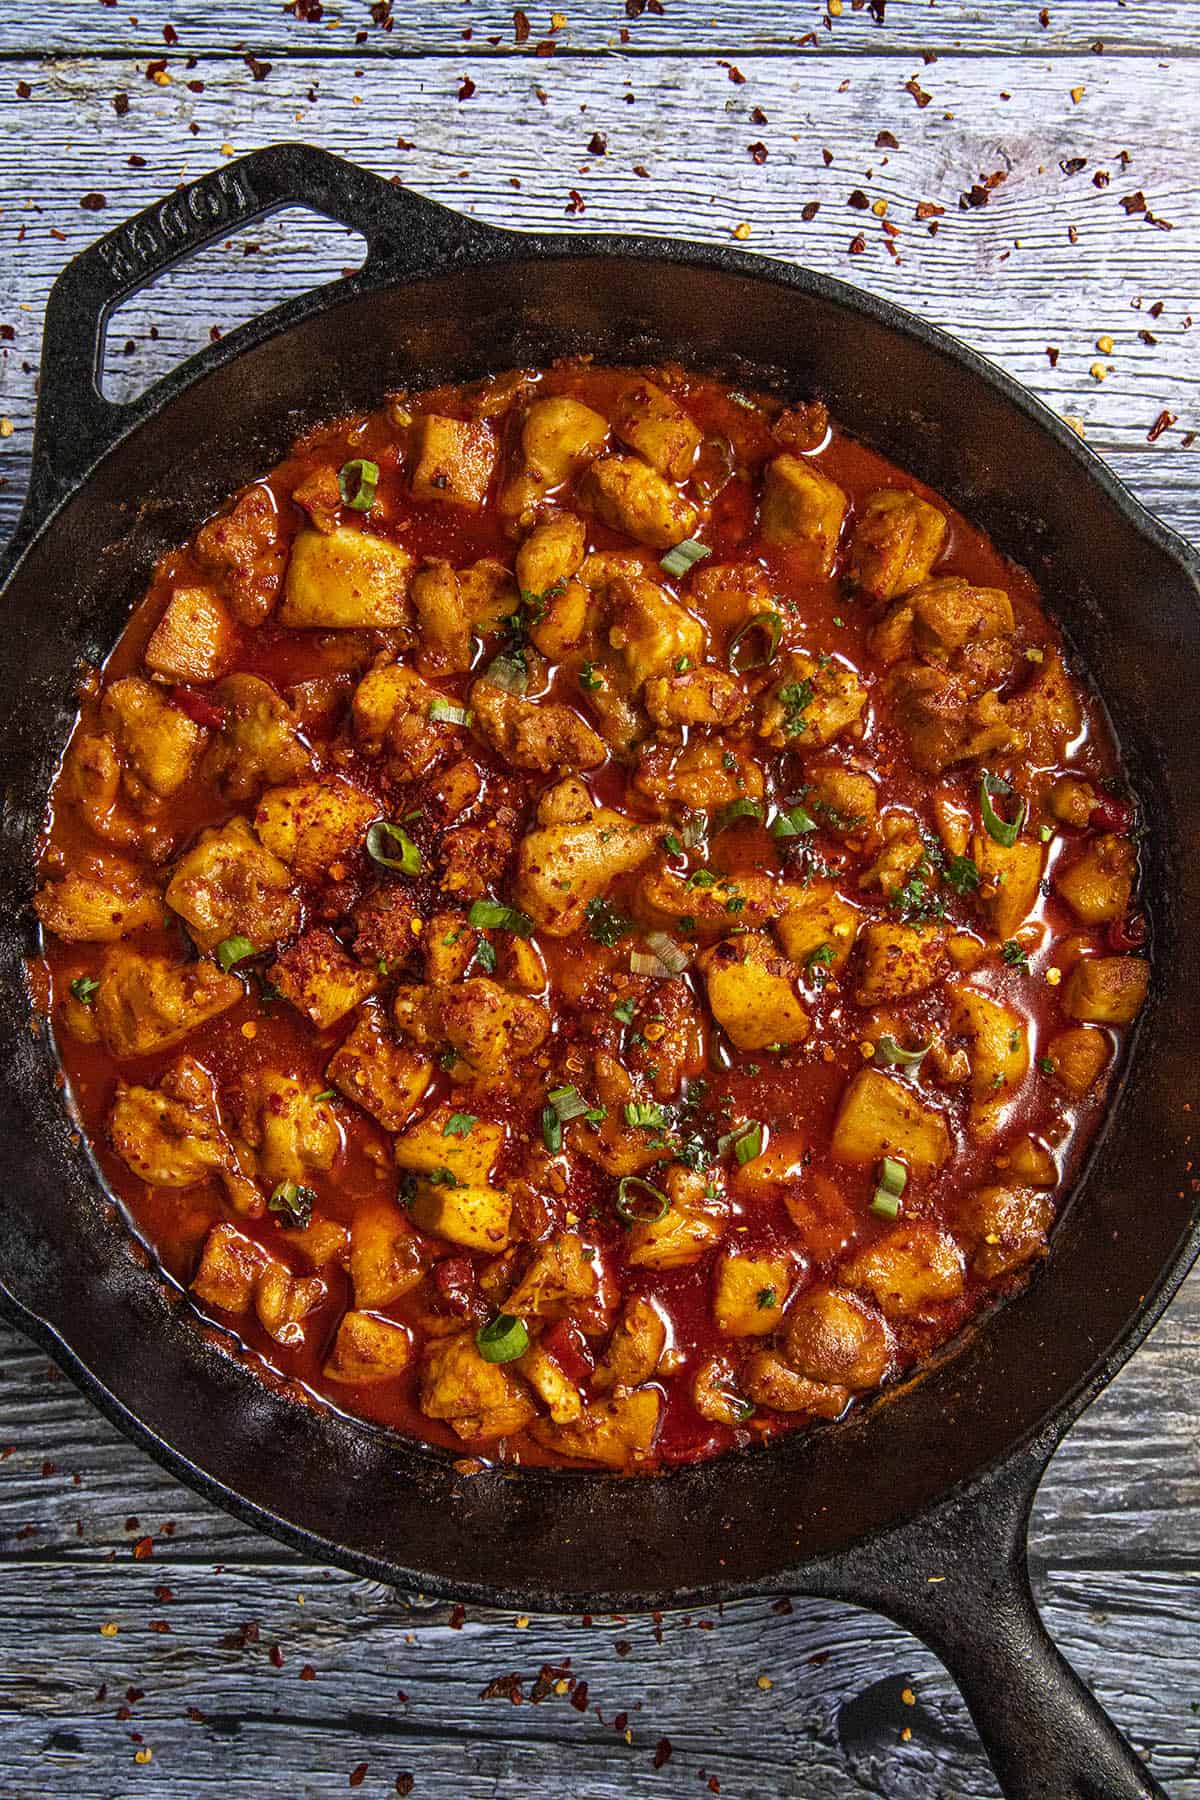 Chunky, spicy buldak in a pan, simmering